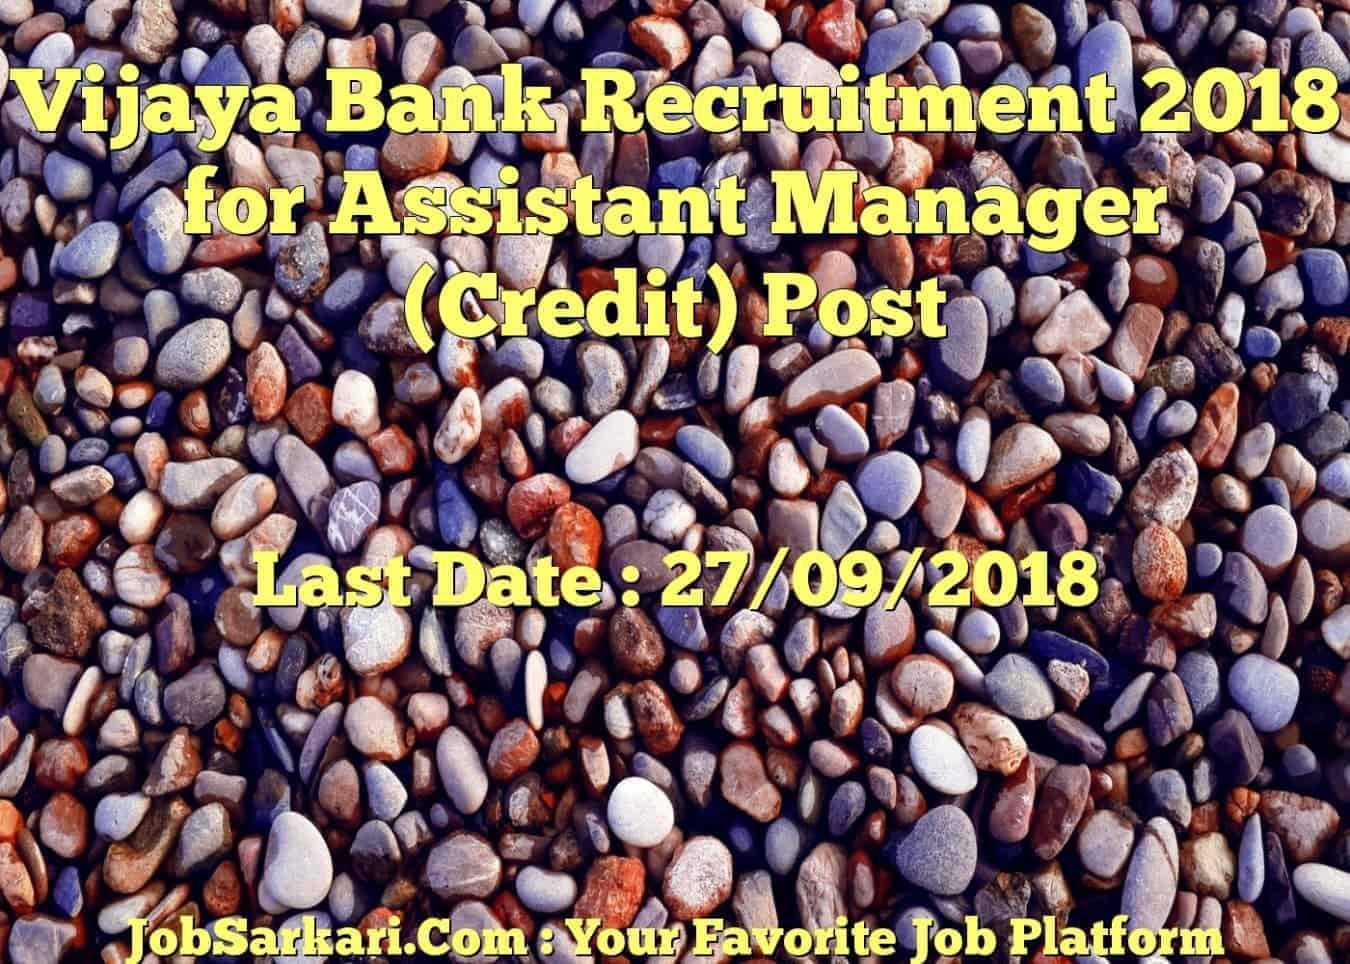 Vijaya Bank Recruitment 2018 for Assistant Manager (Credit) Post